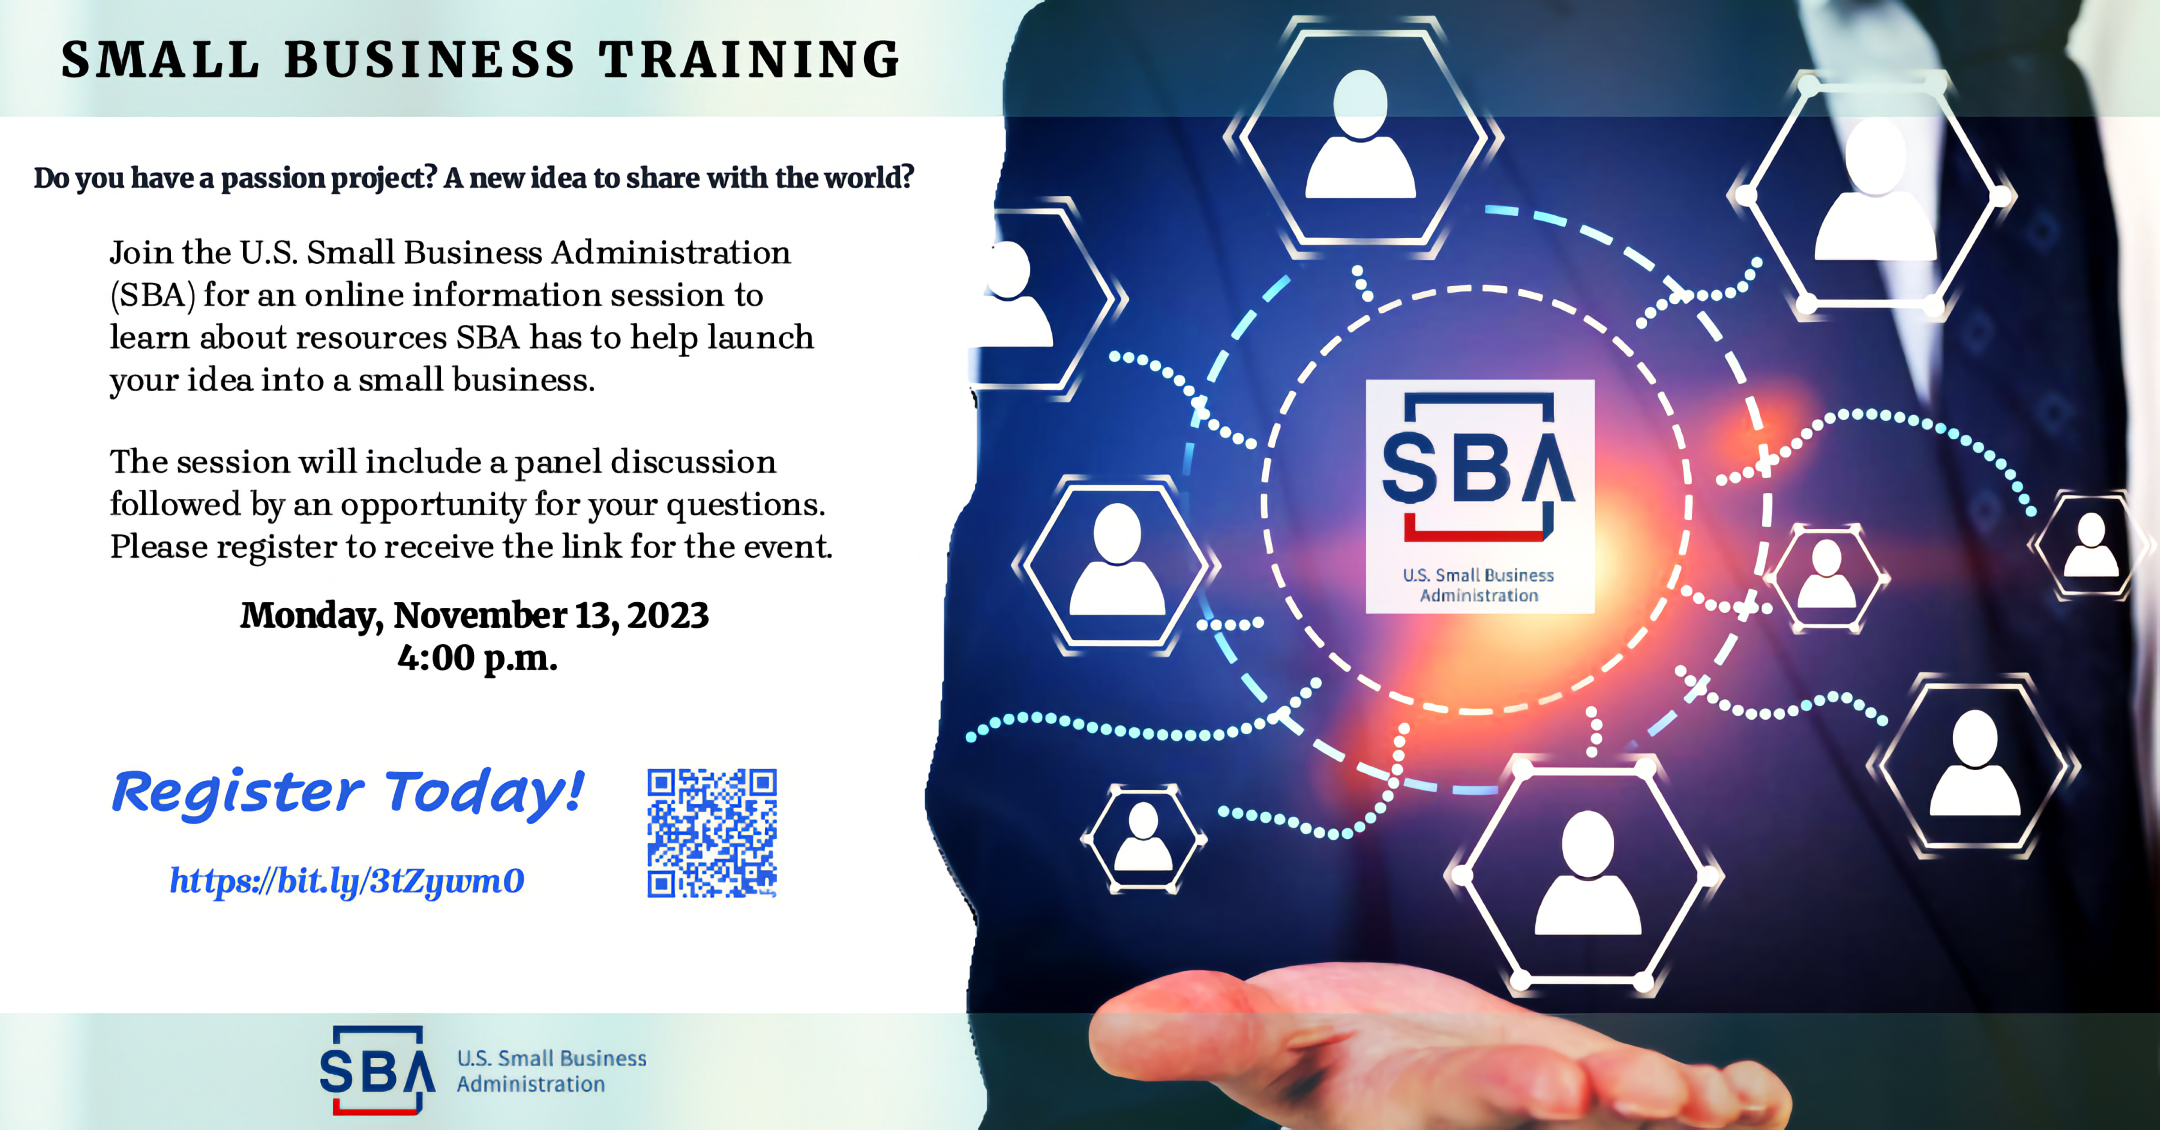 Small Business Training -U.S. Small Business Administration (SBA)